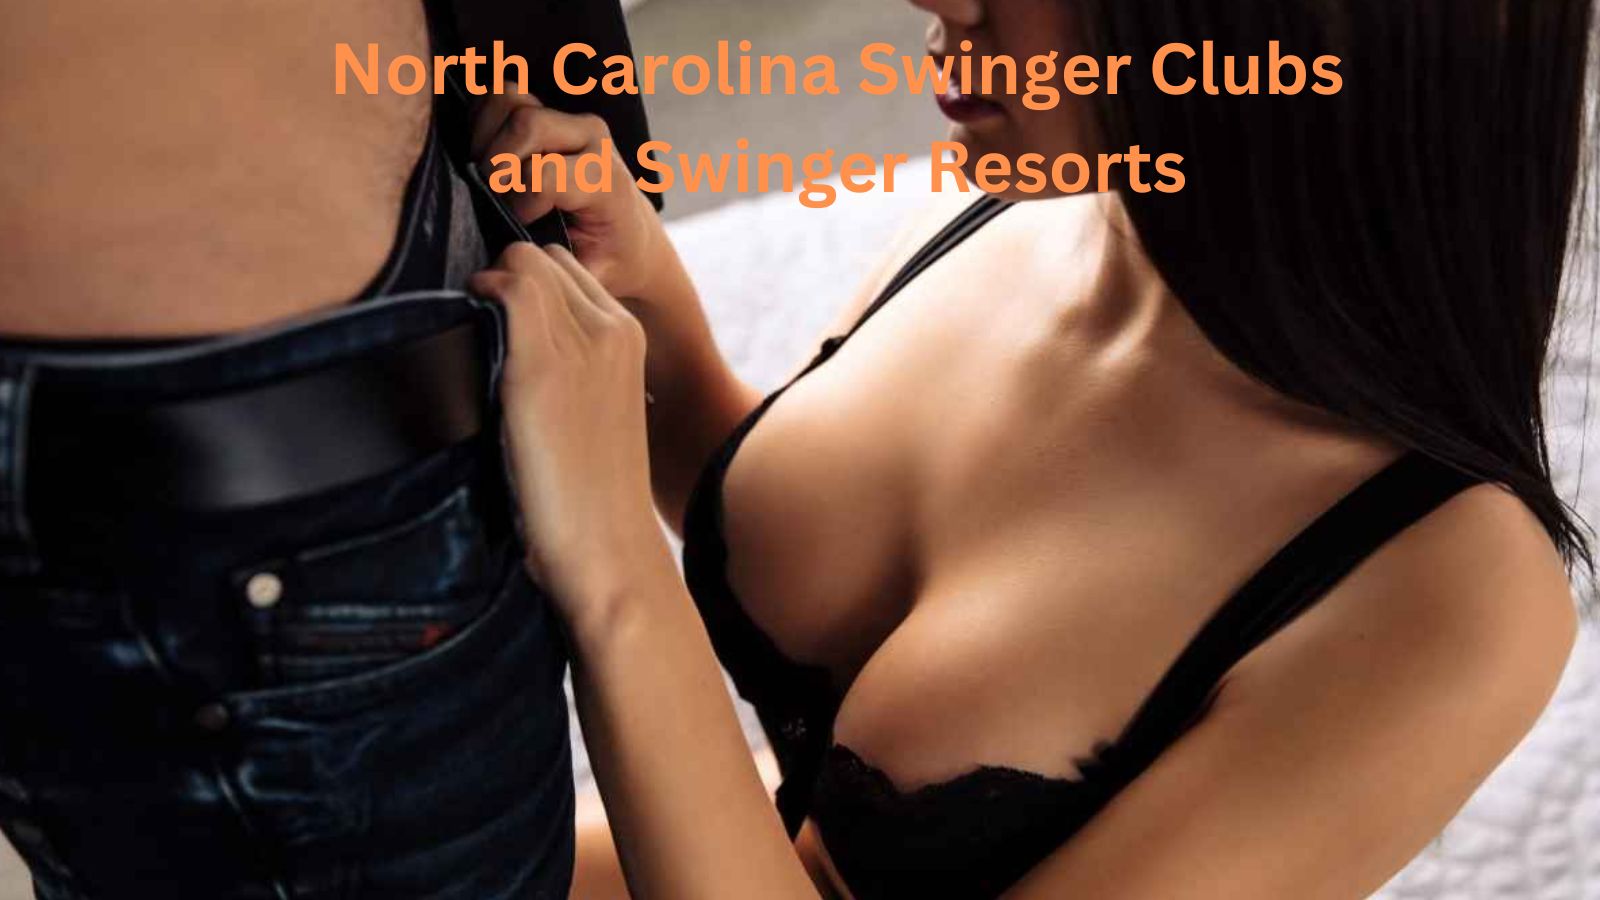 Free Phoenix Area Swingers Pics - 2023 North Carolina Swinger Clubs and Resorts: Top fun swinger spots